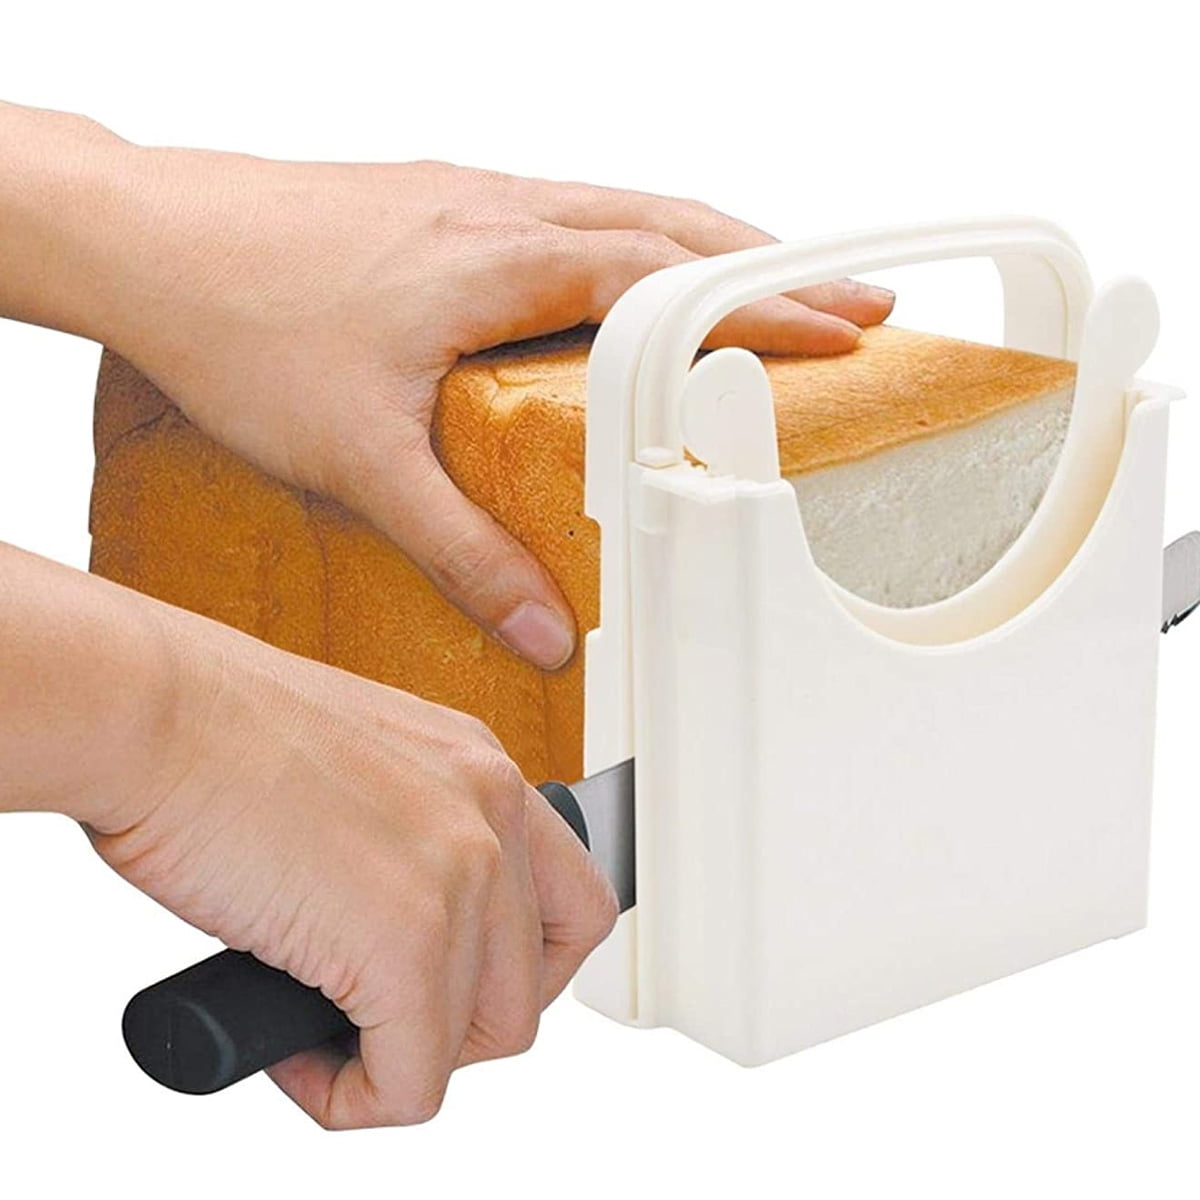 Kitchen Bread Slicer Toast Baking Tools Loft Slicer Foldable Slicing Cutting Guide 